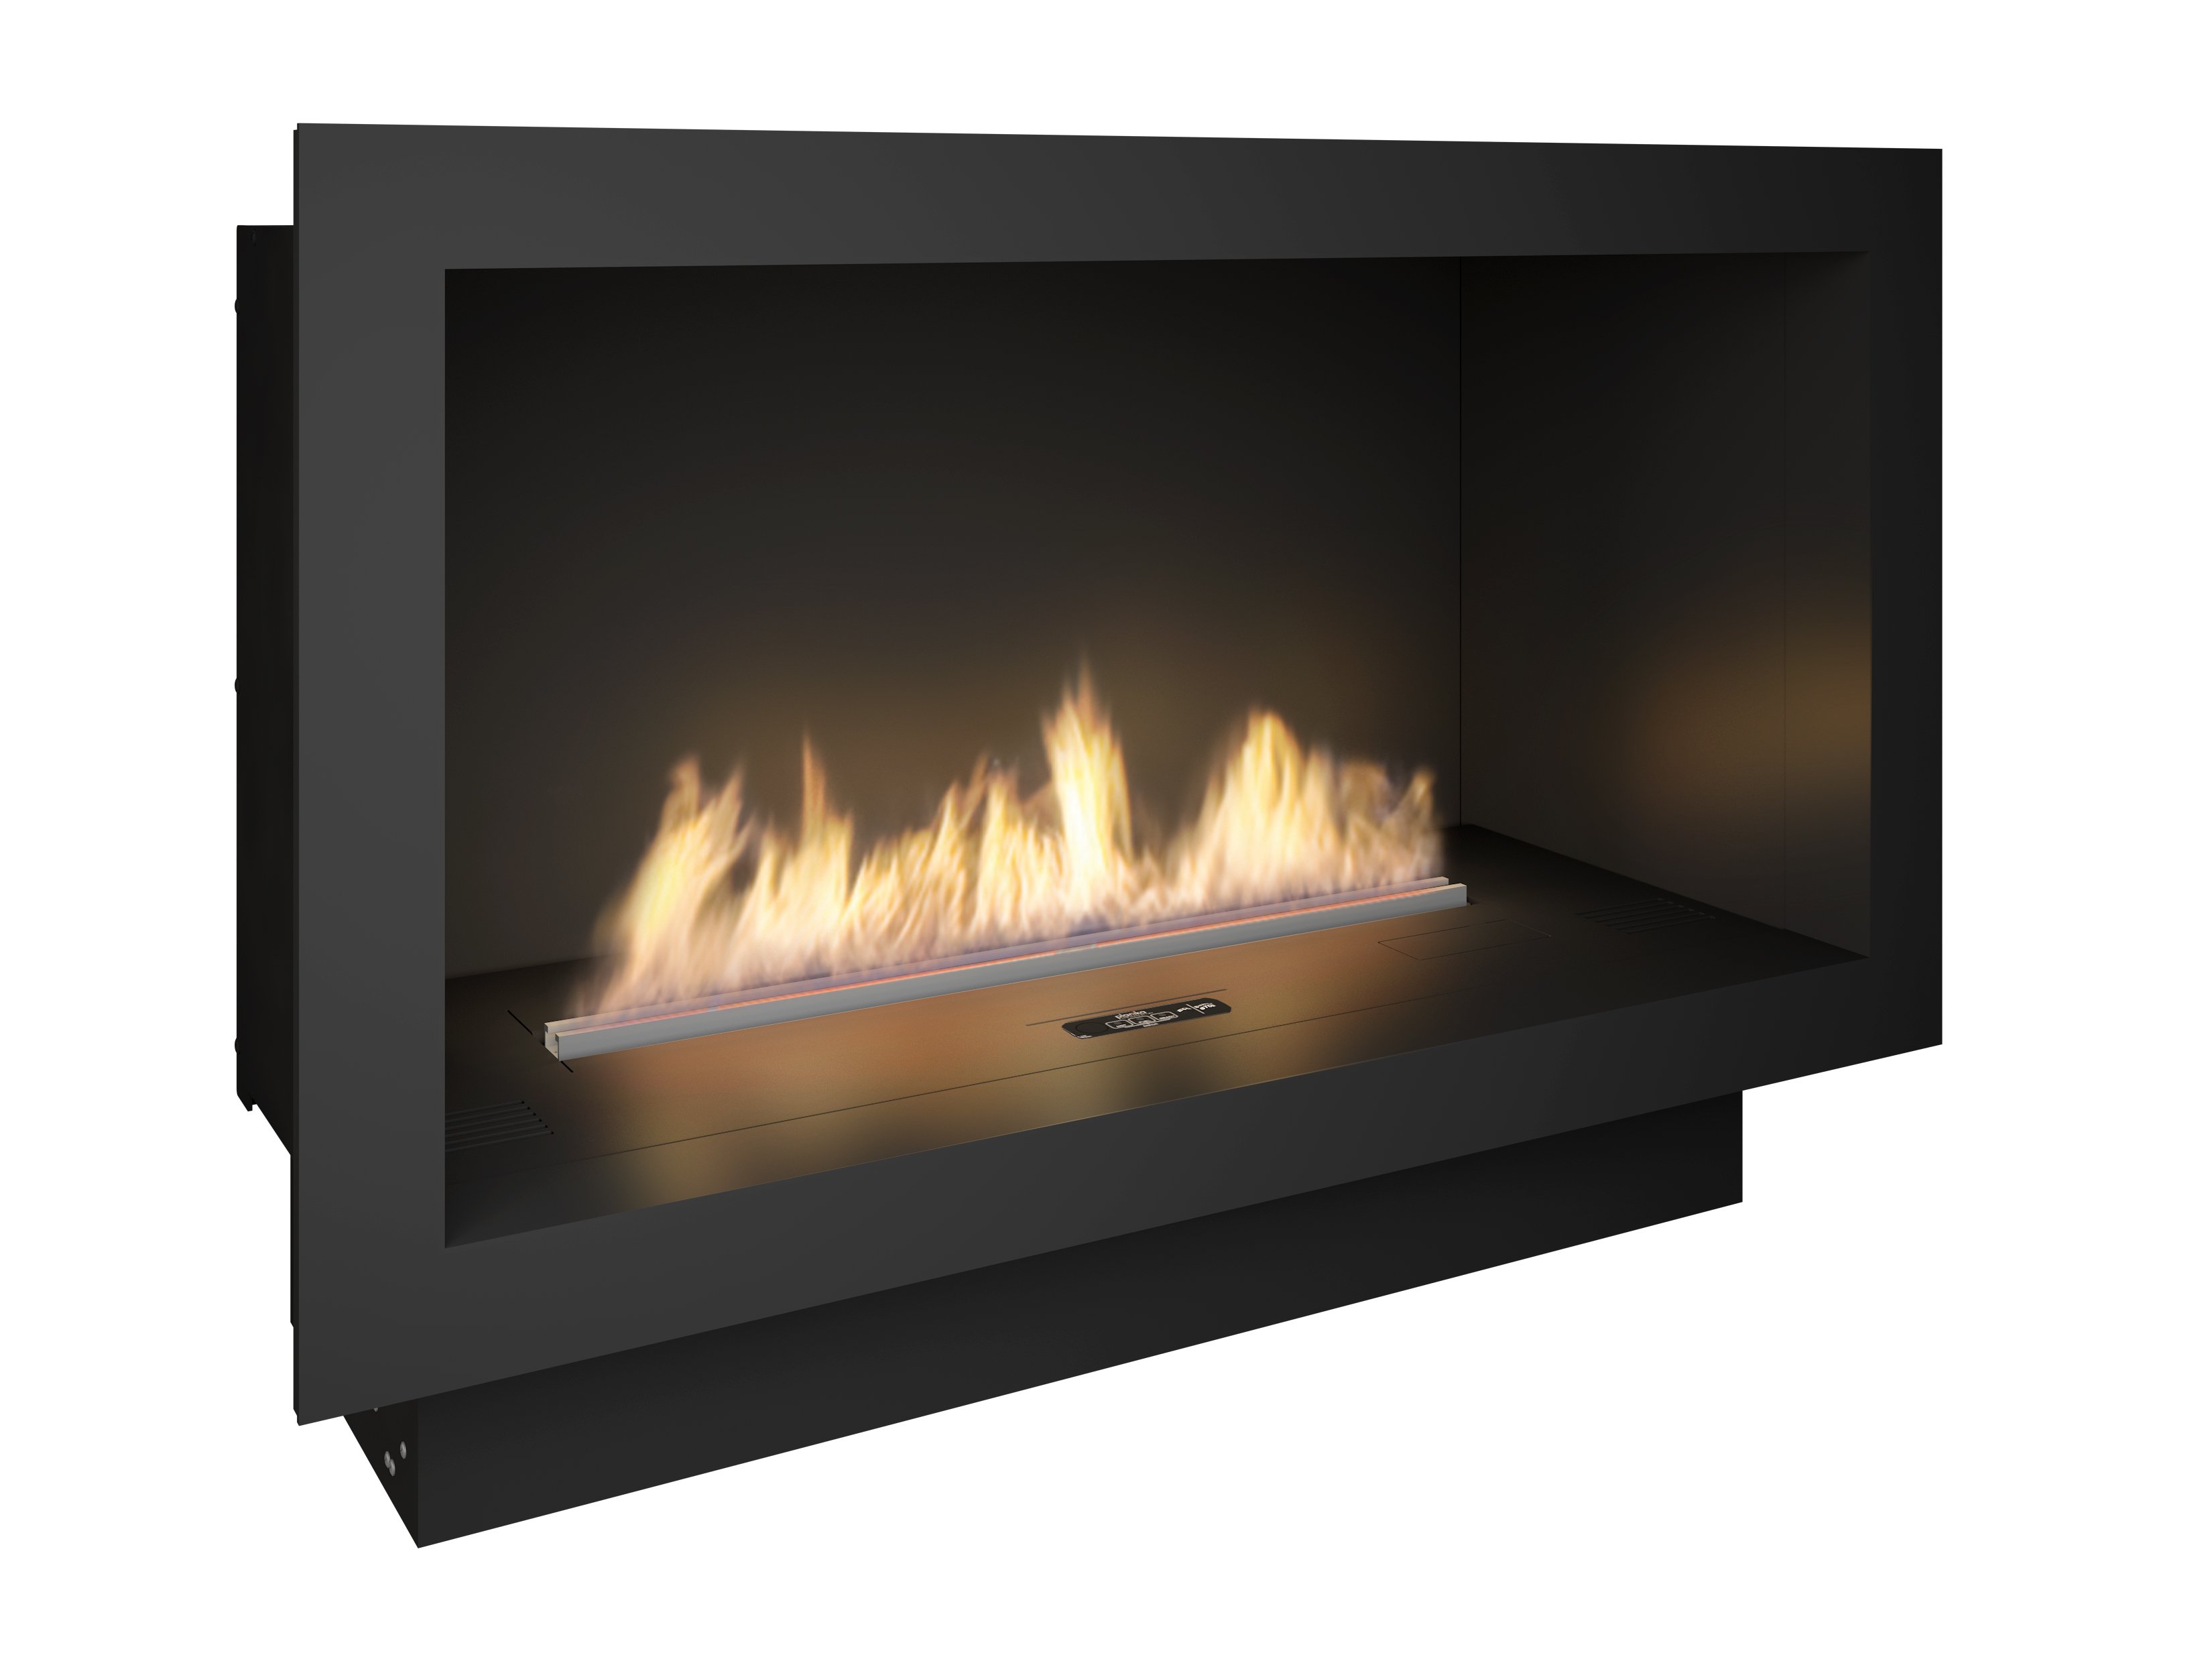 Youtube Fireplace Luxury Planika Ethanolkamine Zu Fairen Preisen